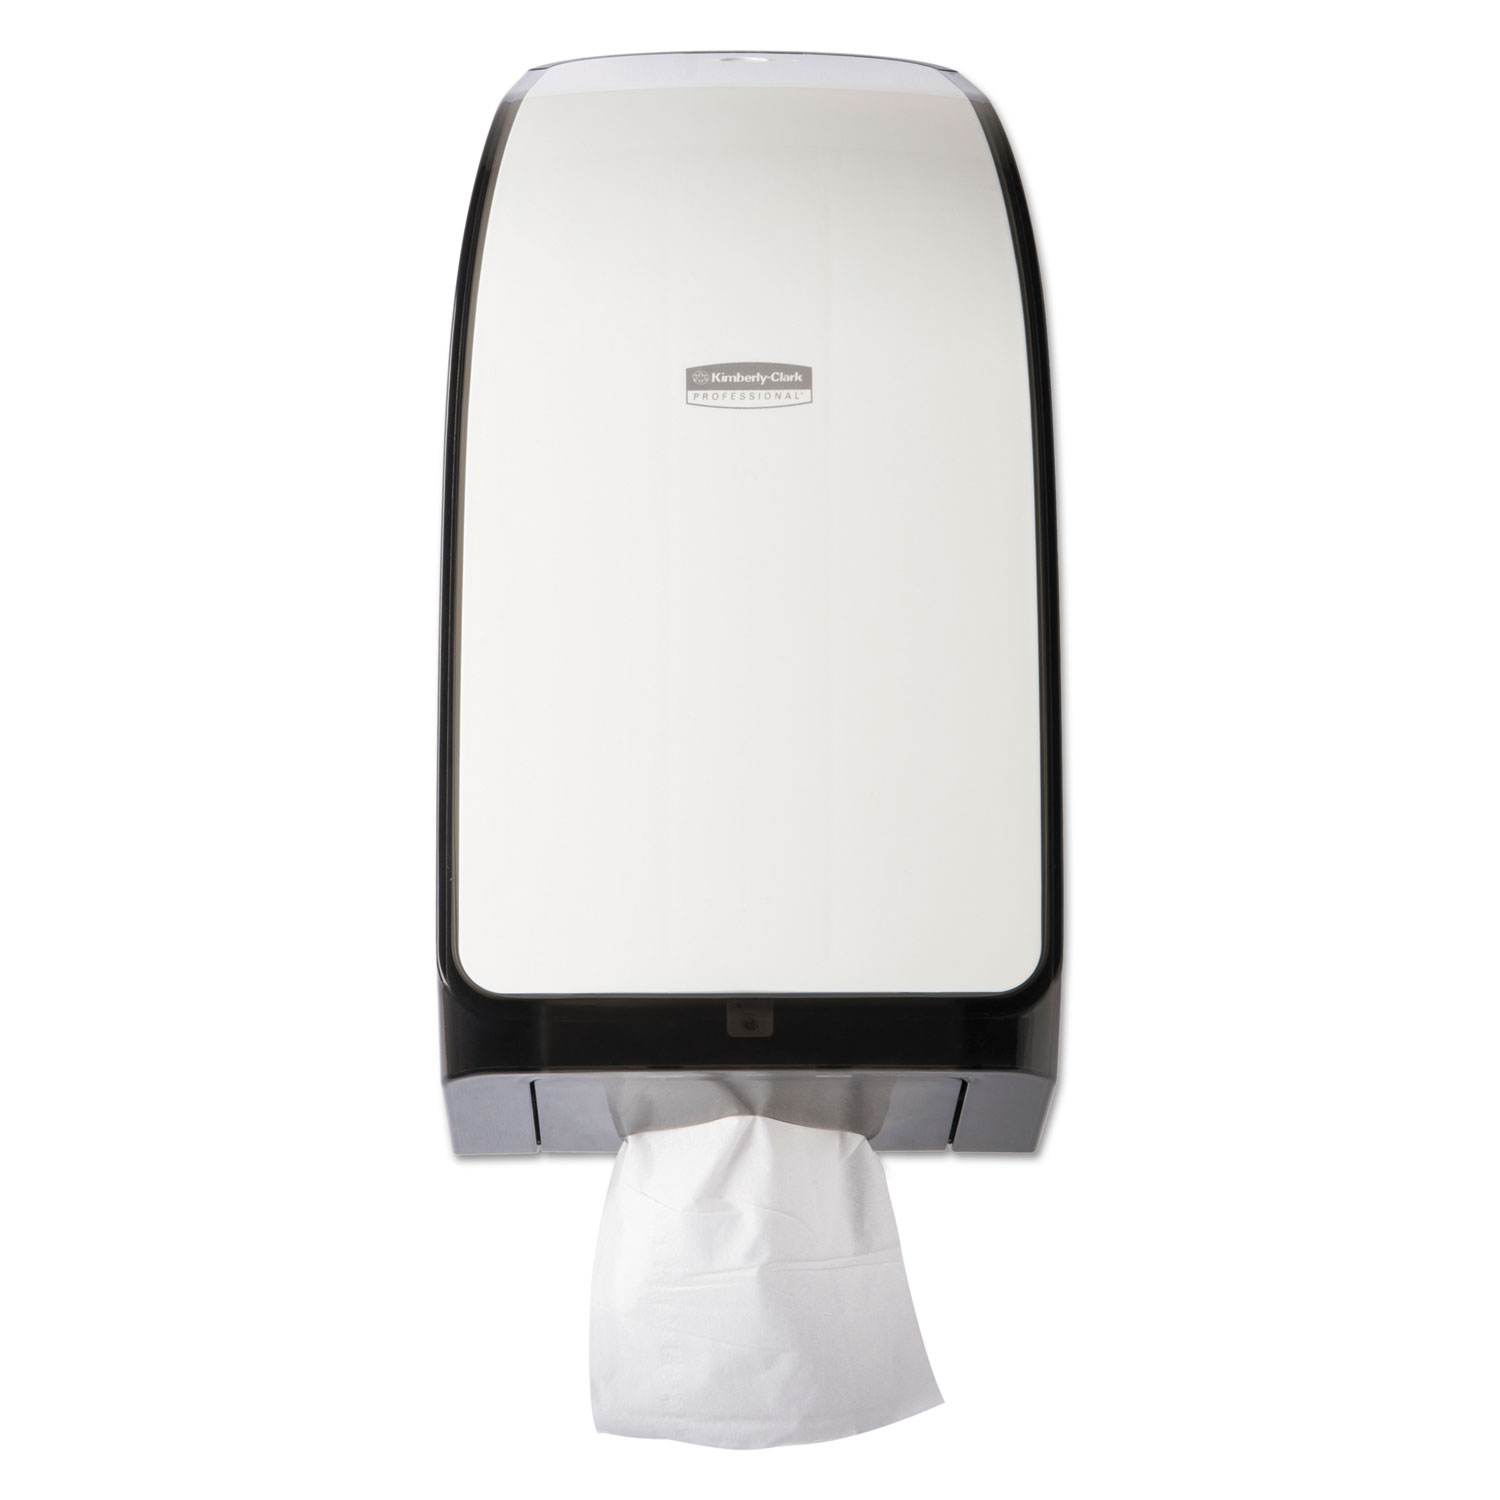  Scott 40407 Control Hygienic Bathroom Tissue Dispenser, 7.375 x 6.375 x 13 3/4, White (KCC40407) 